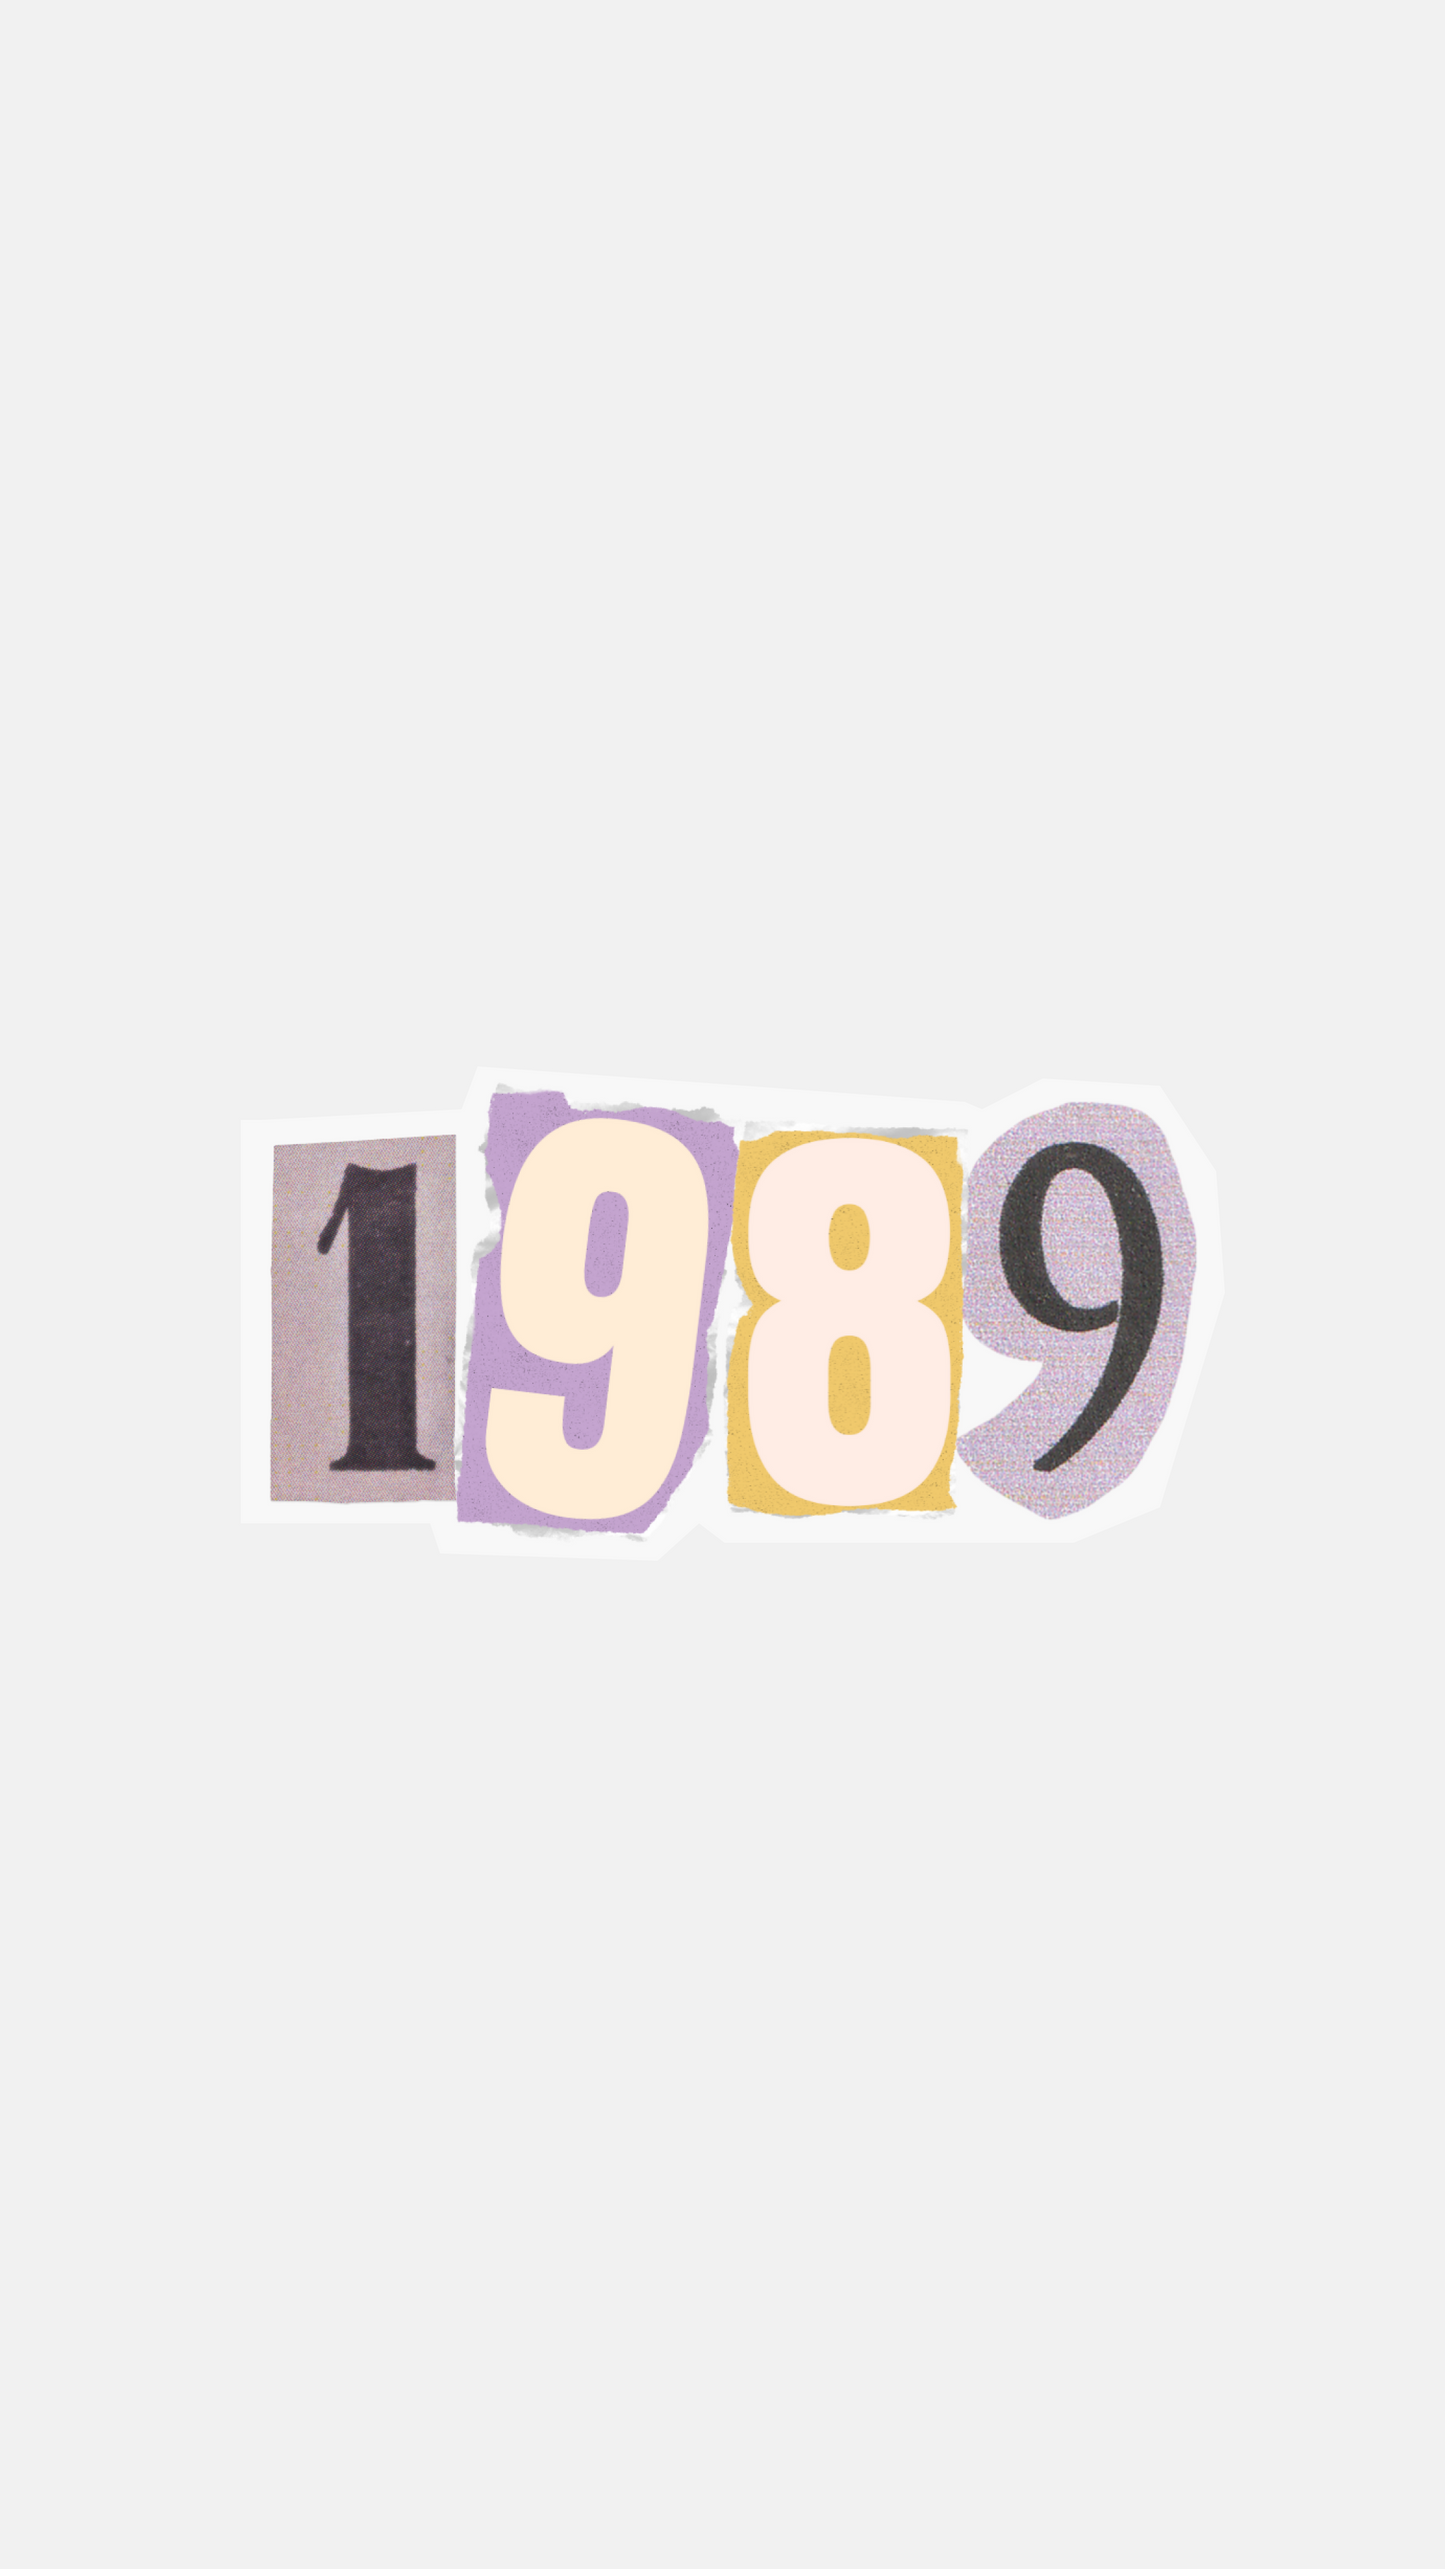 1989 (Taylor's version) sticker